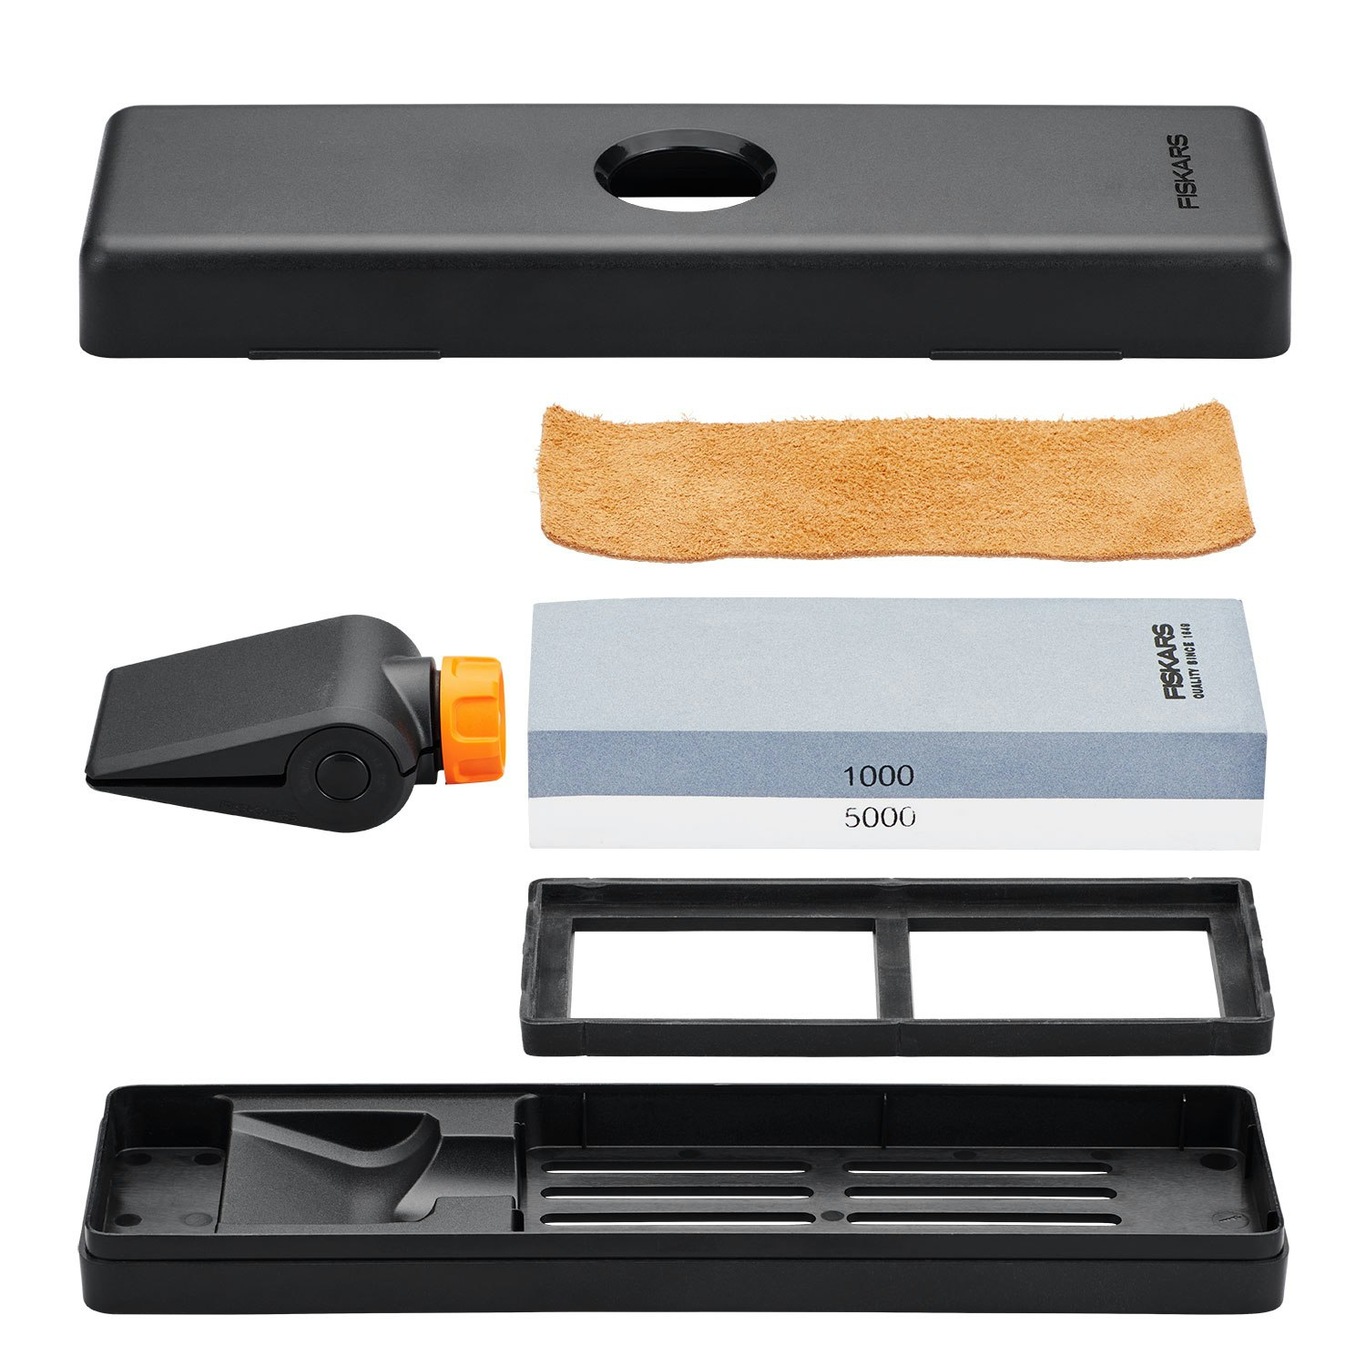 https://royaldesign.com/image/2/fiskars-premium-knife-sharpener-1?w=800&quality=80